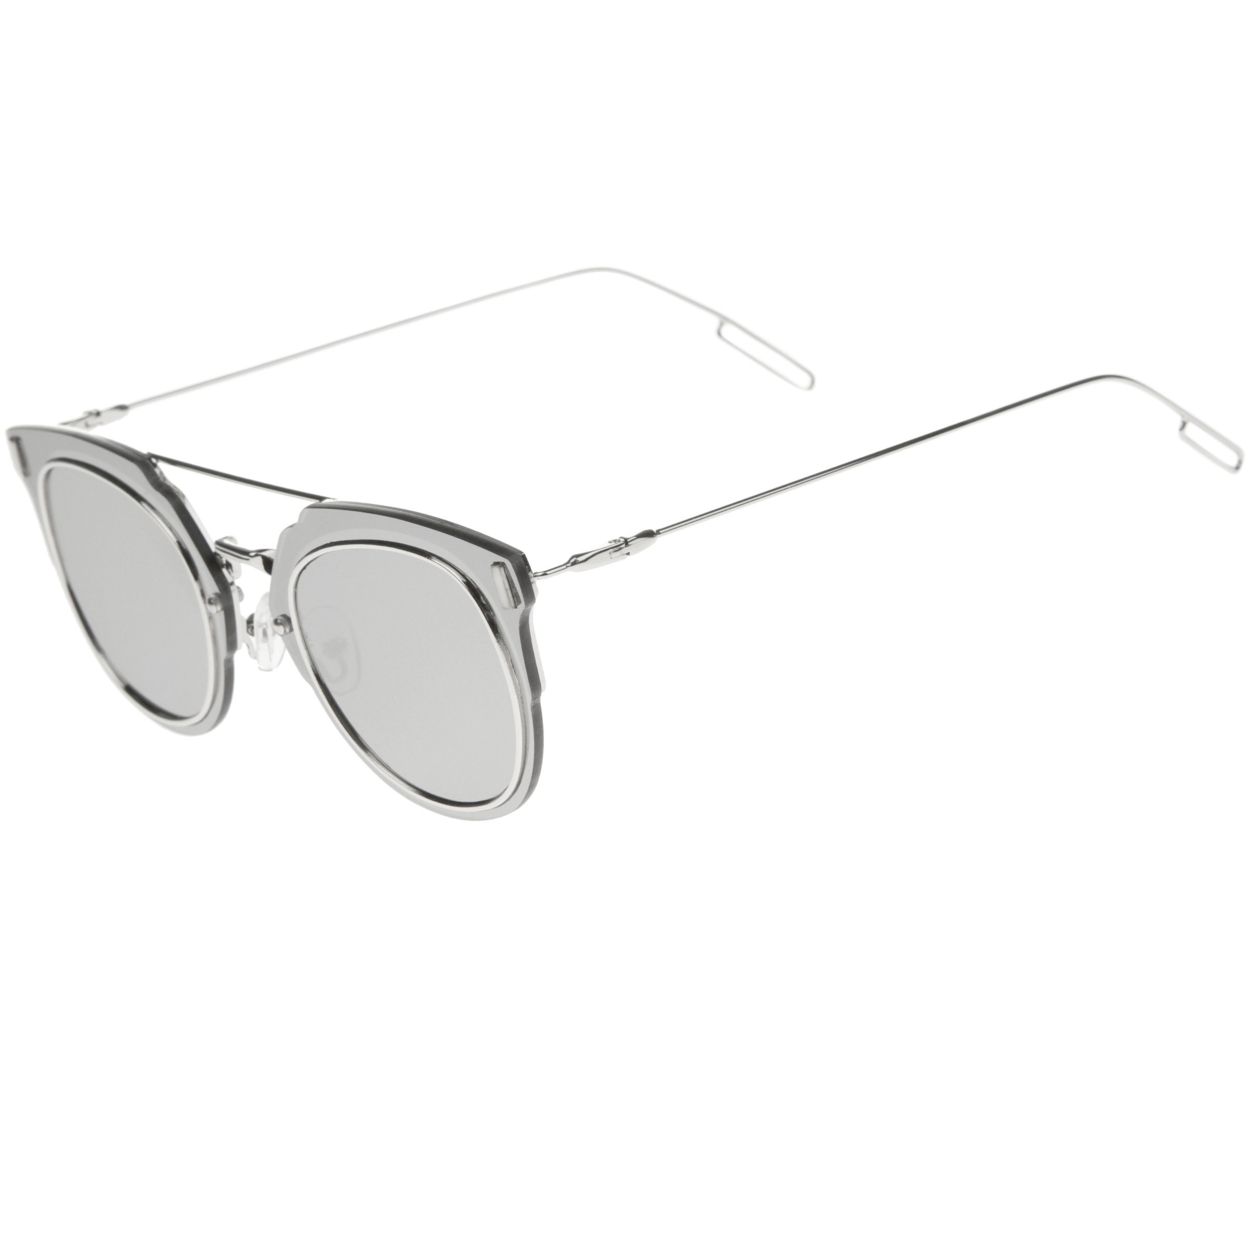 Modern Ultra Slim Wire Frame Mirrored Flat Lens Pantos Sunglasses 58mm - Silver / Blue Mirror